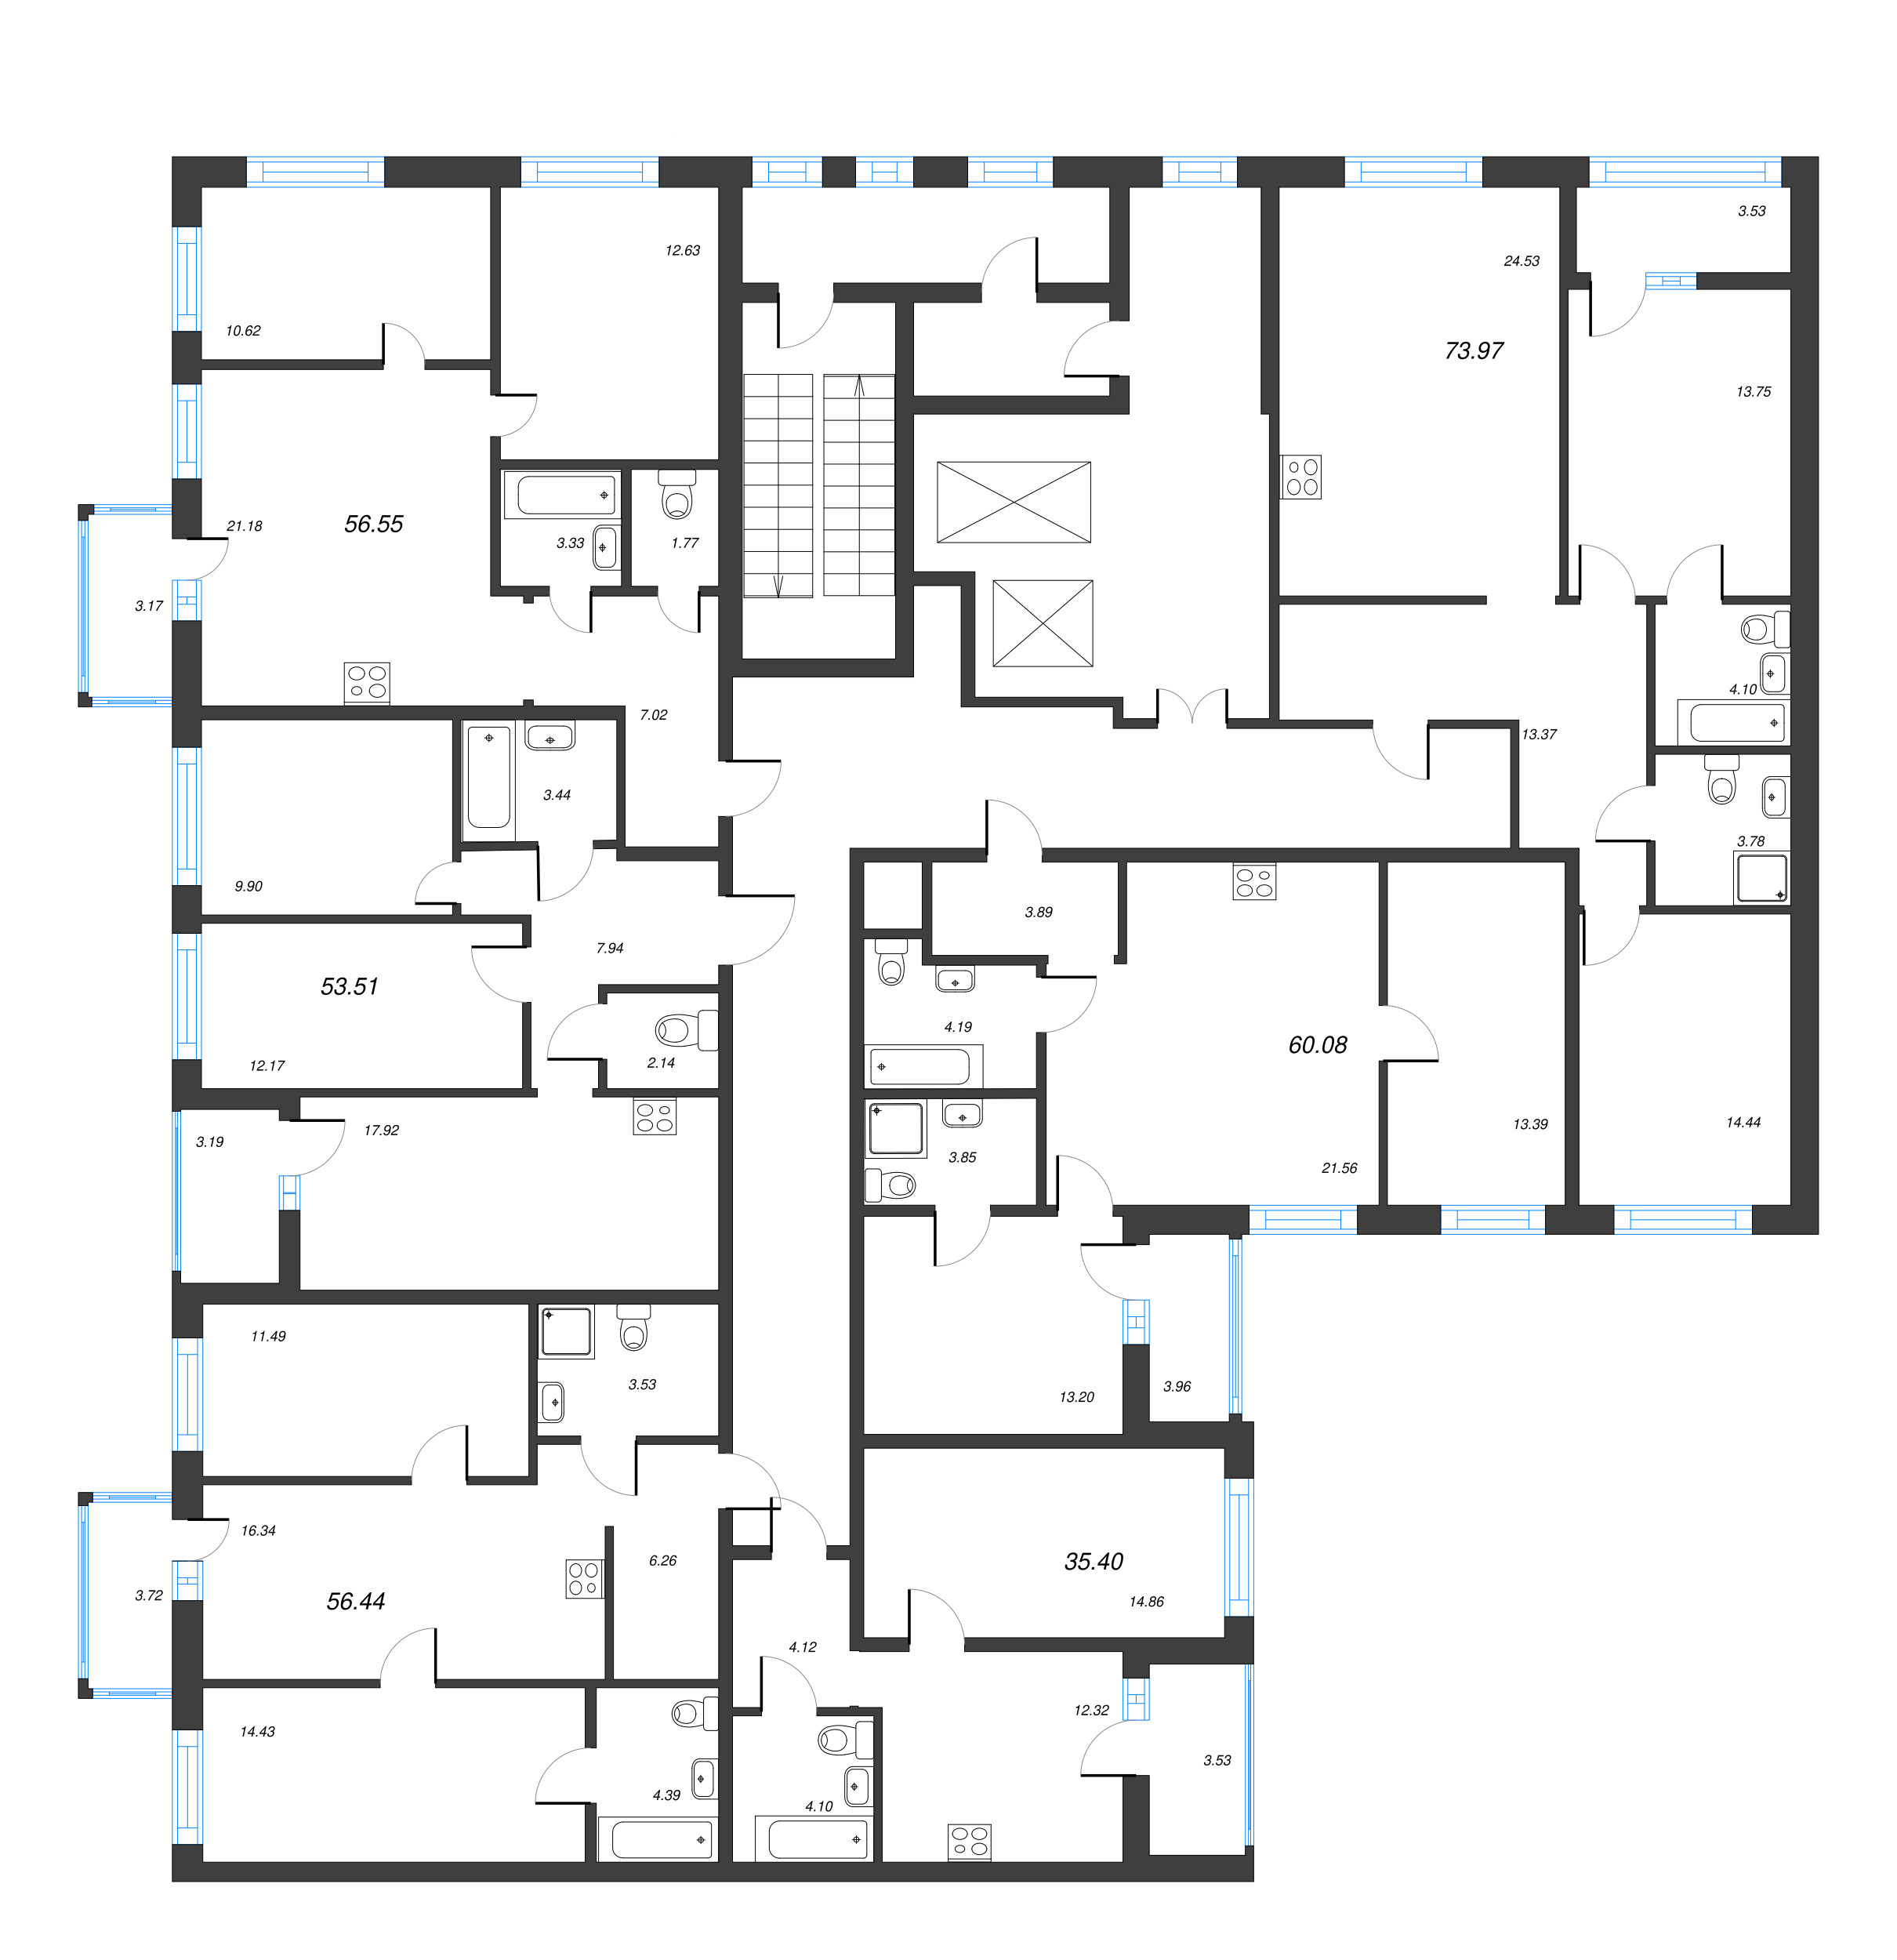 3-комнатная (Евро) квартира, 73.97 м² - планировка этажа